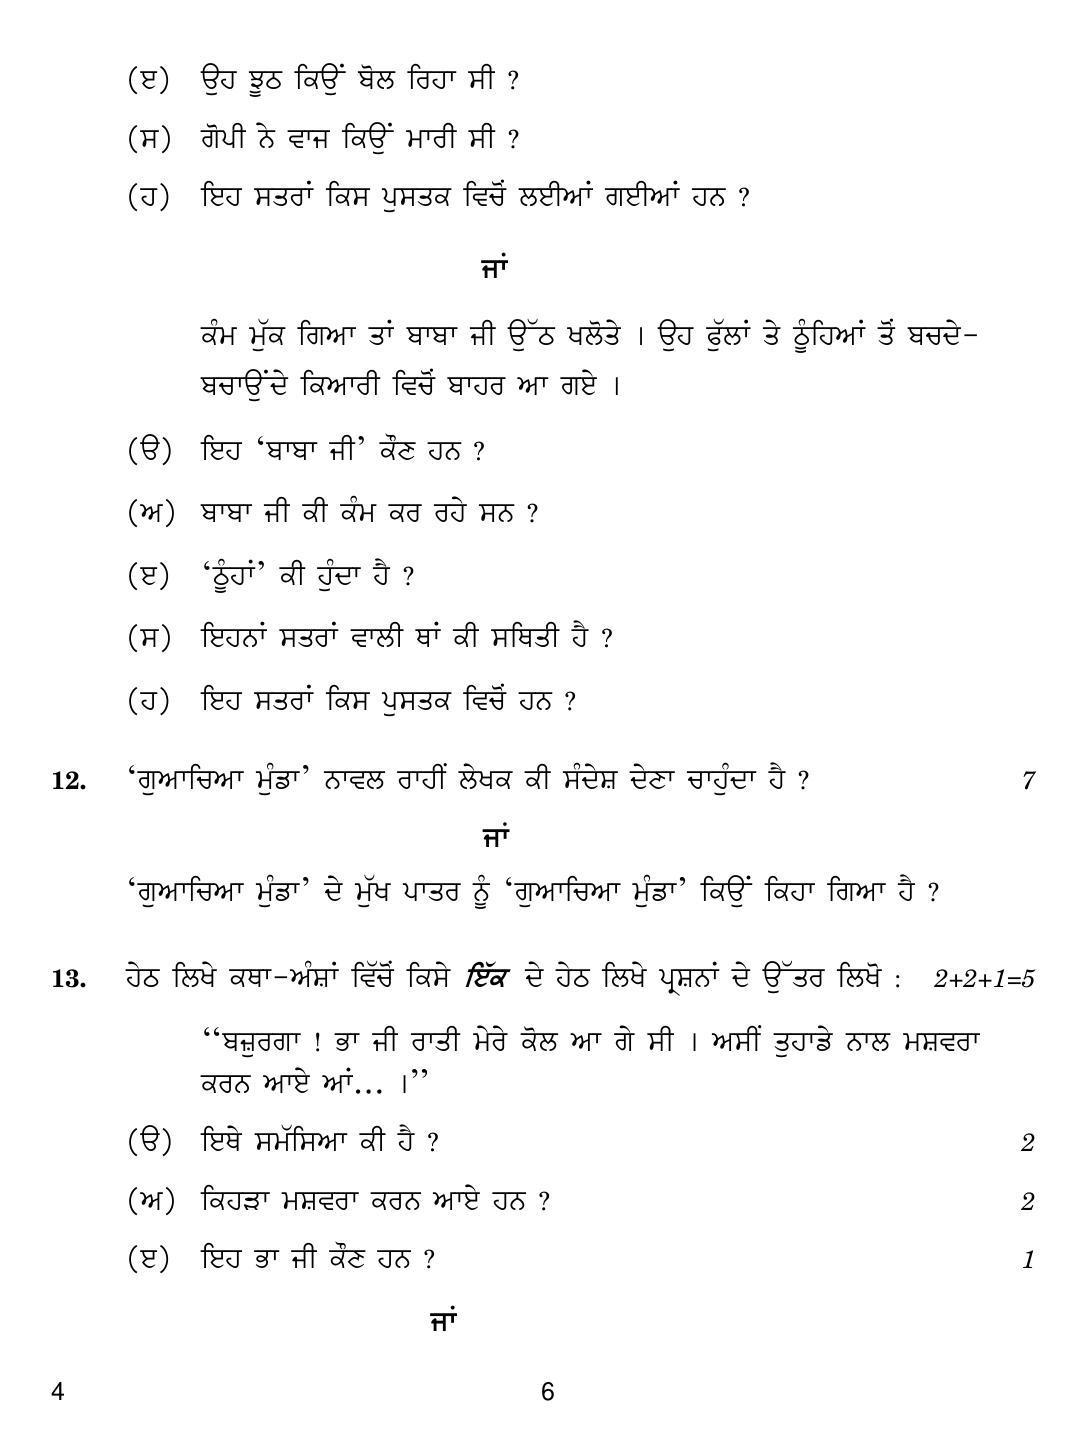 CBSE Class 12 4 Punjabi 2019 Compartment Question Paper - Page 6